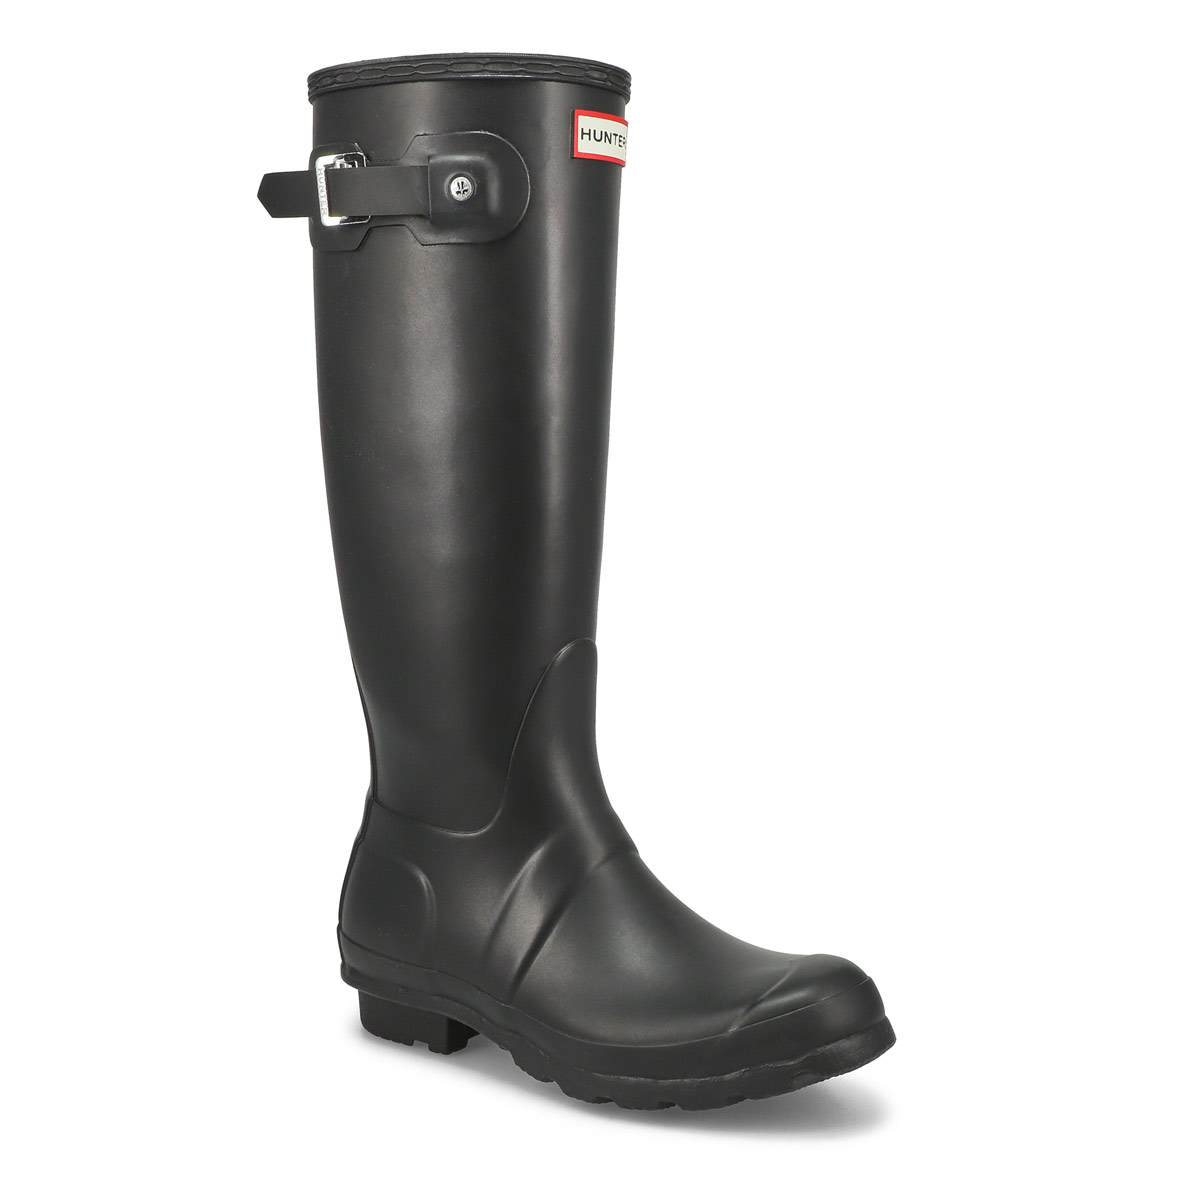 black and grey rain boots